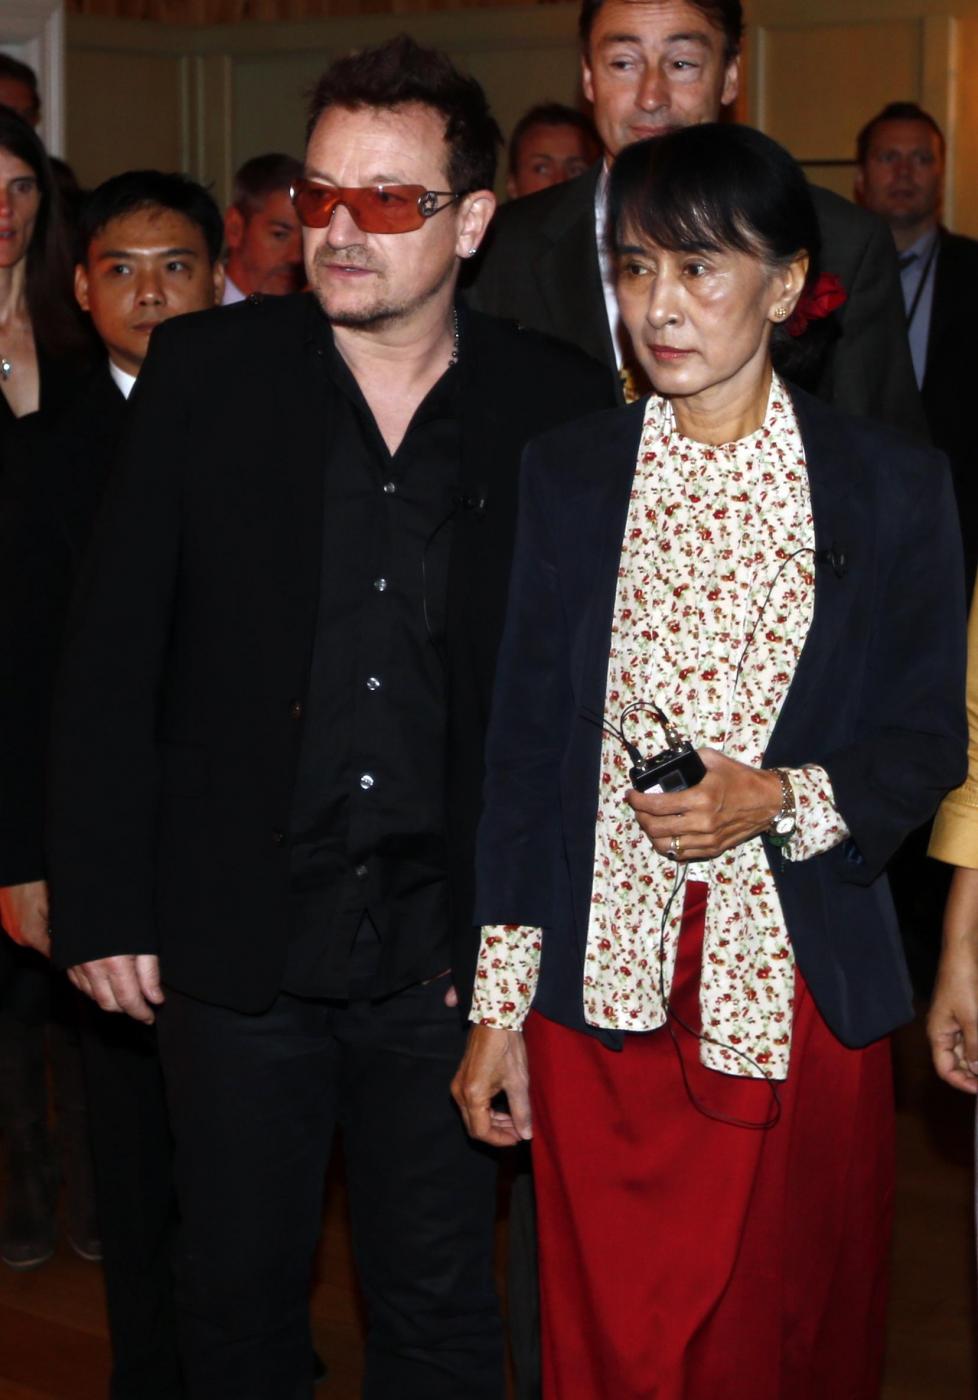 Oslo, Aung san Suu Kyi incontra la star degli U2 Bono05